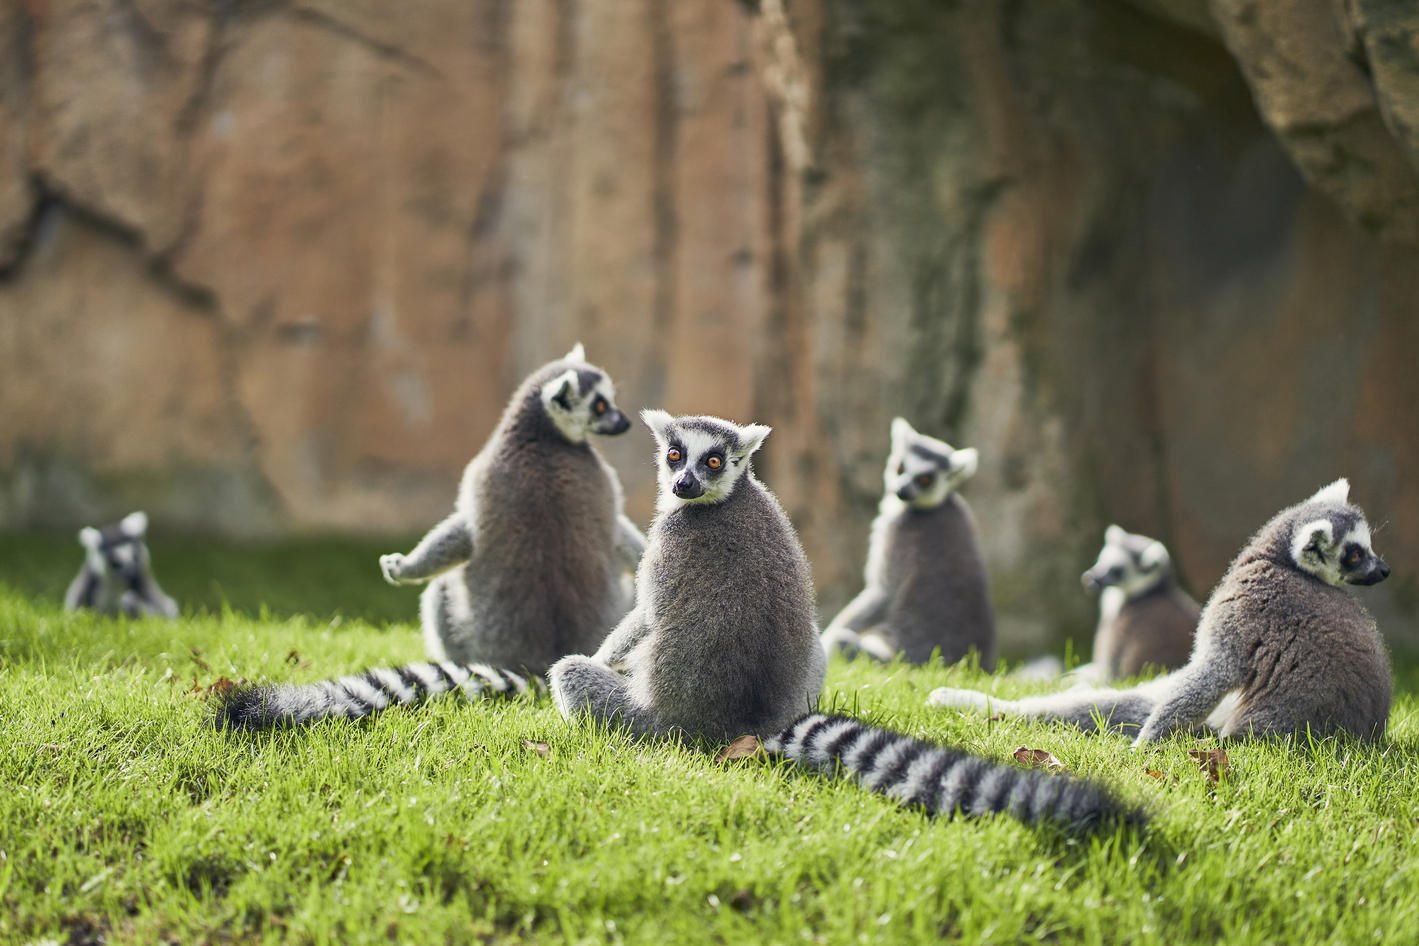 Lemurs sunbathing at Valencia’s bioparc